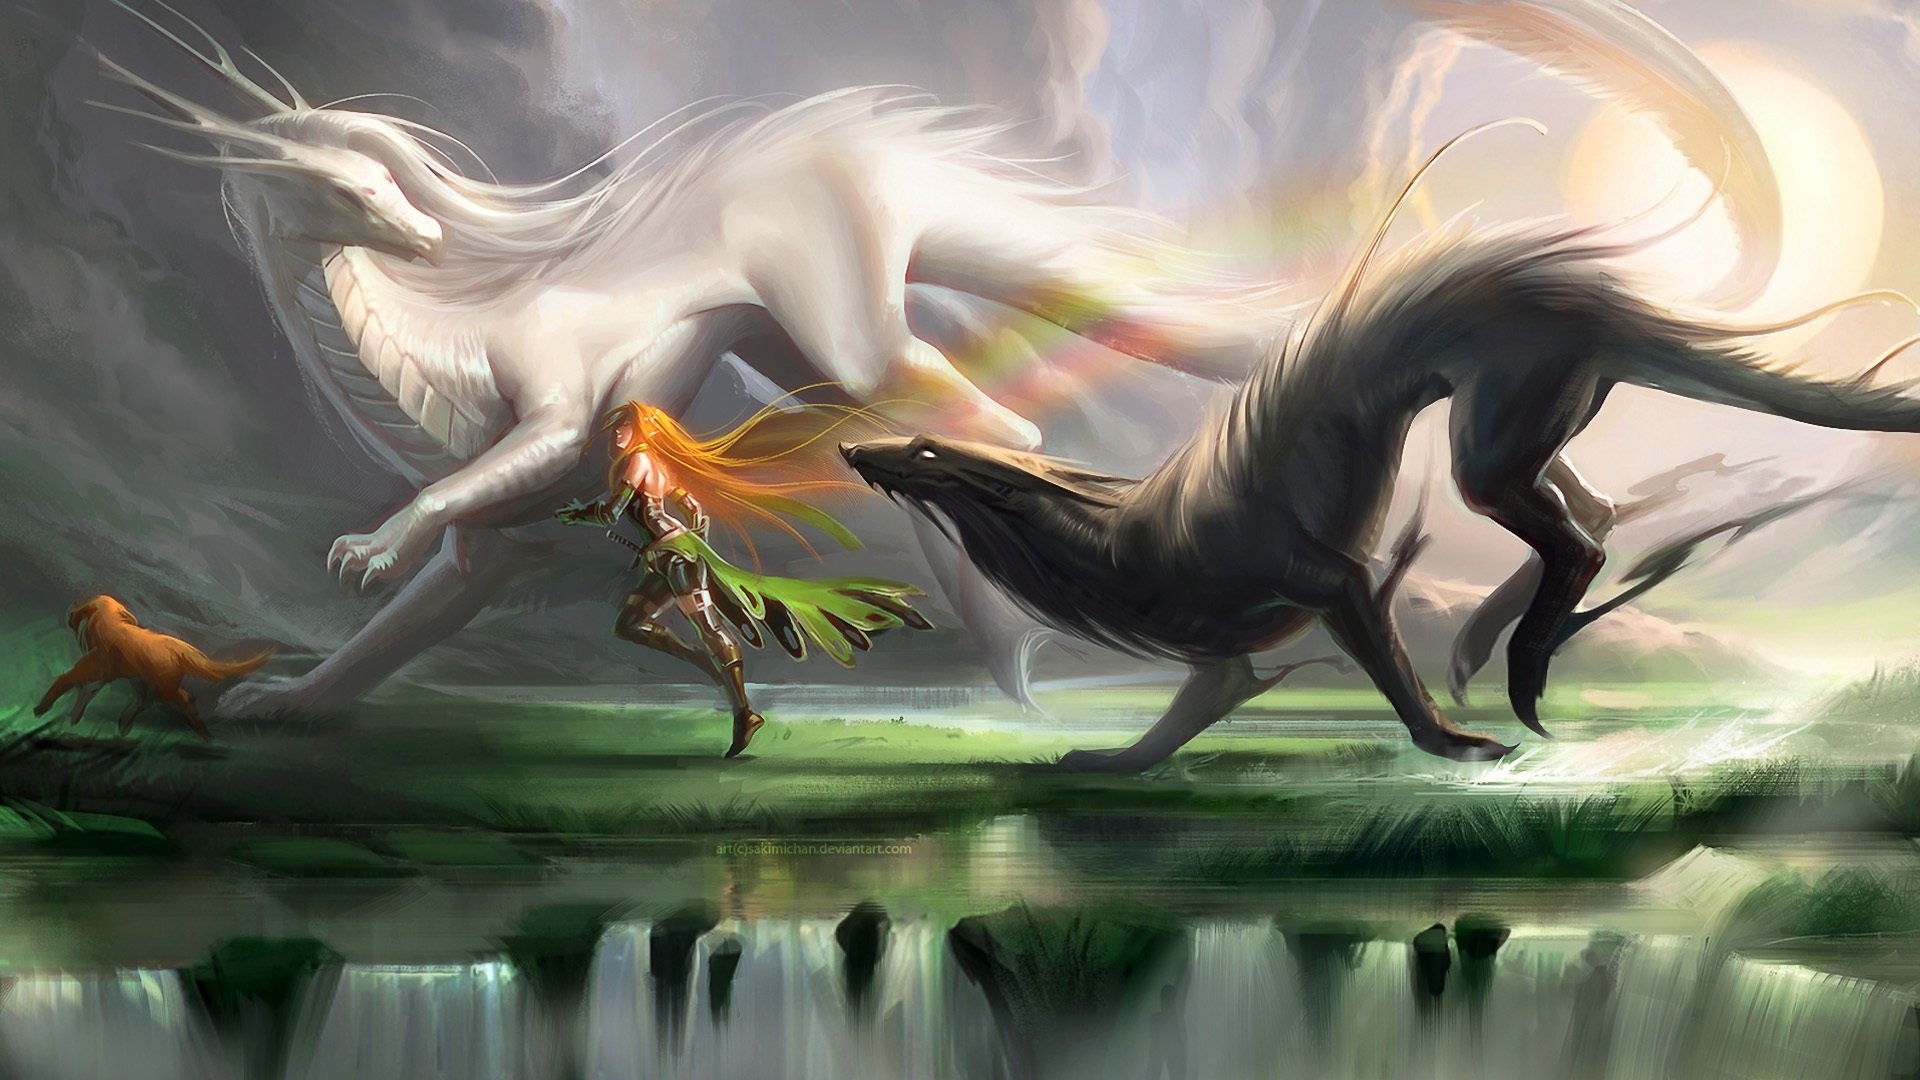 Mythical Creatures desktop wallpaper hd